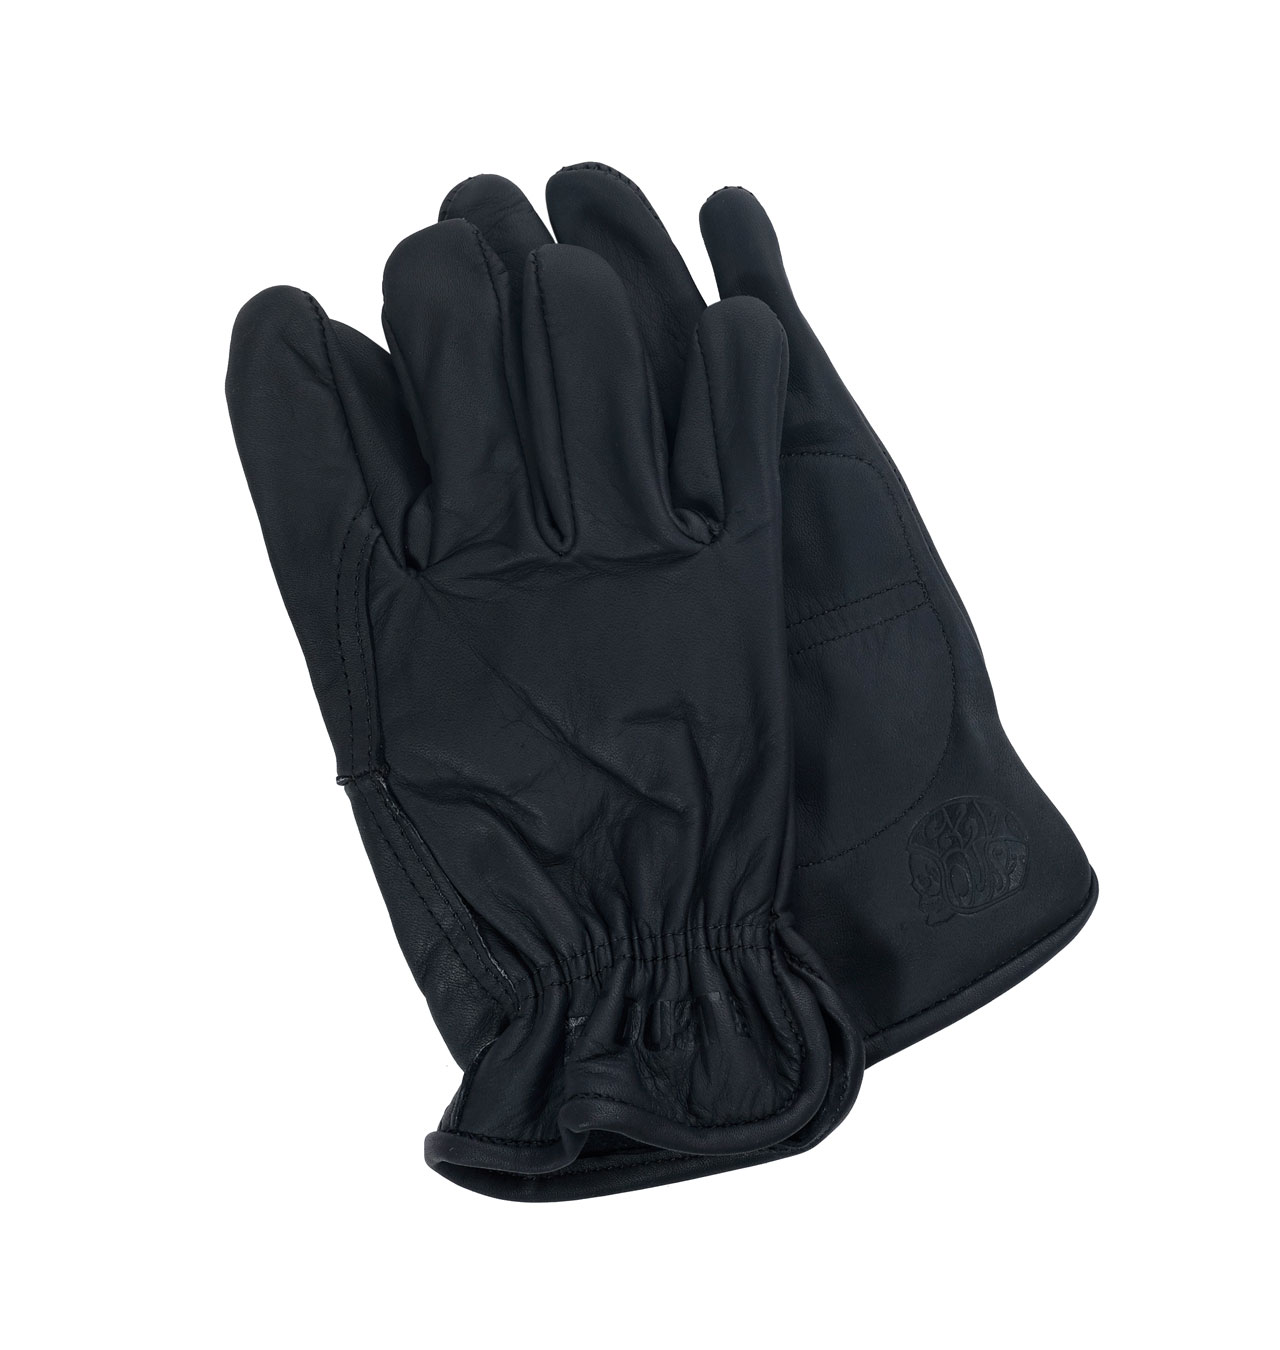 Eat-Dust---X-Power-Glove-Leather---Black-99123